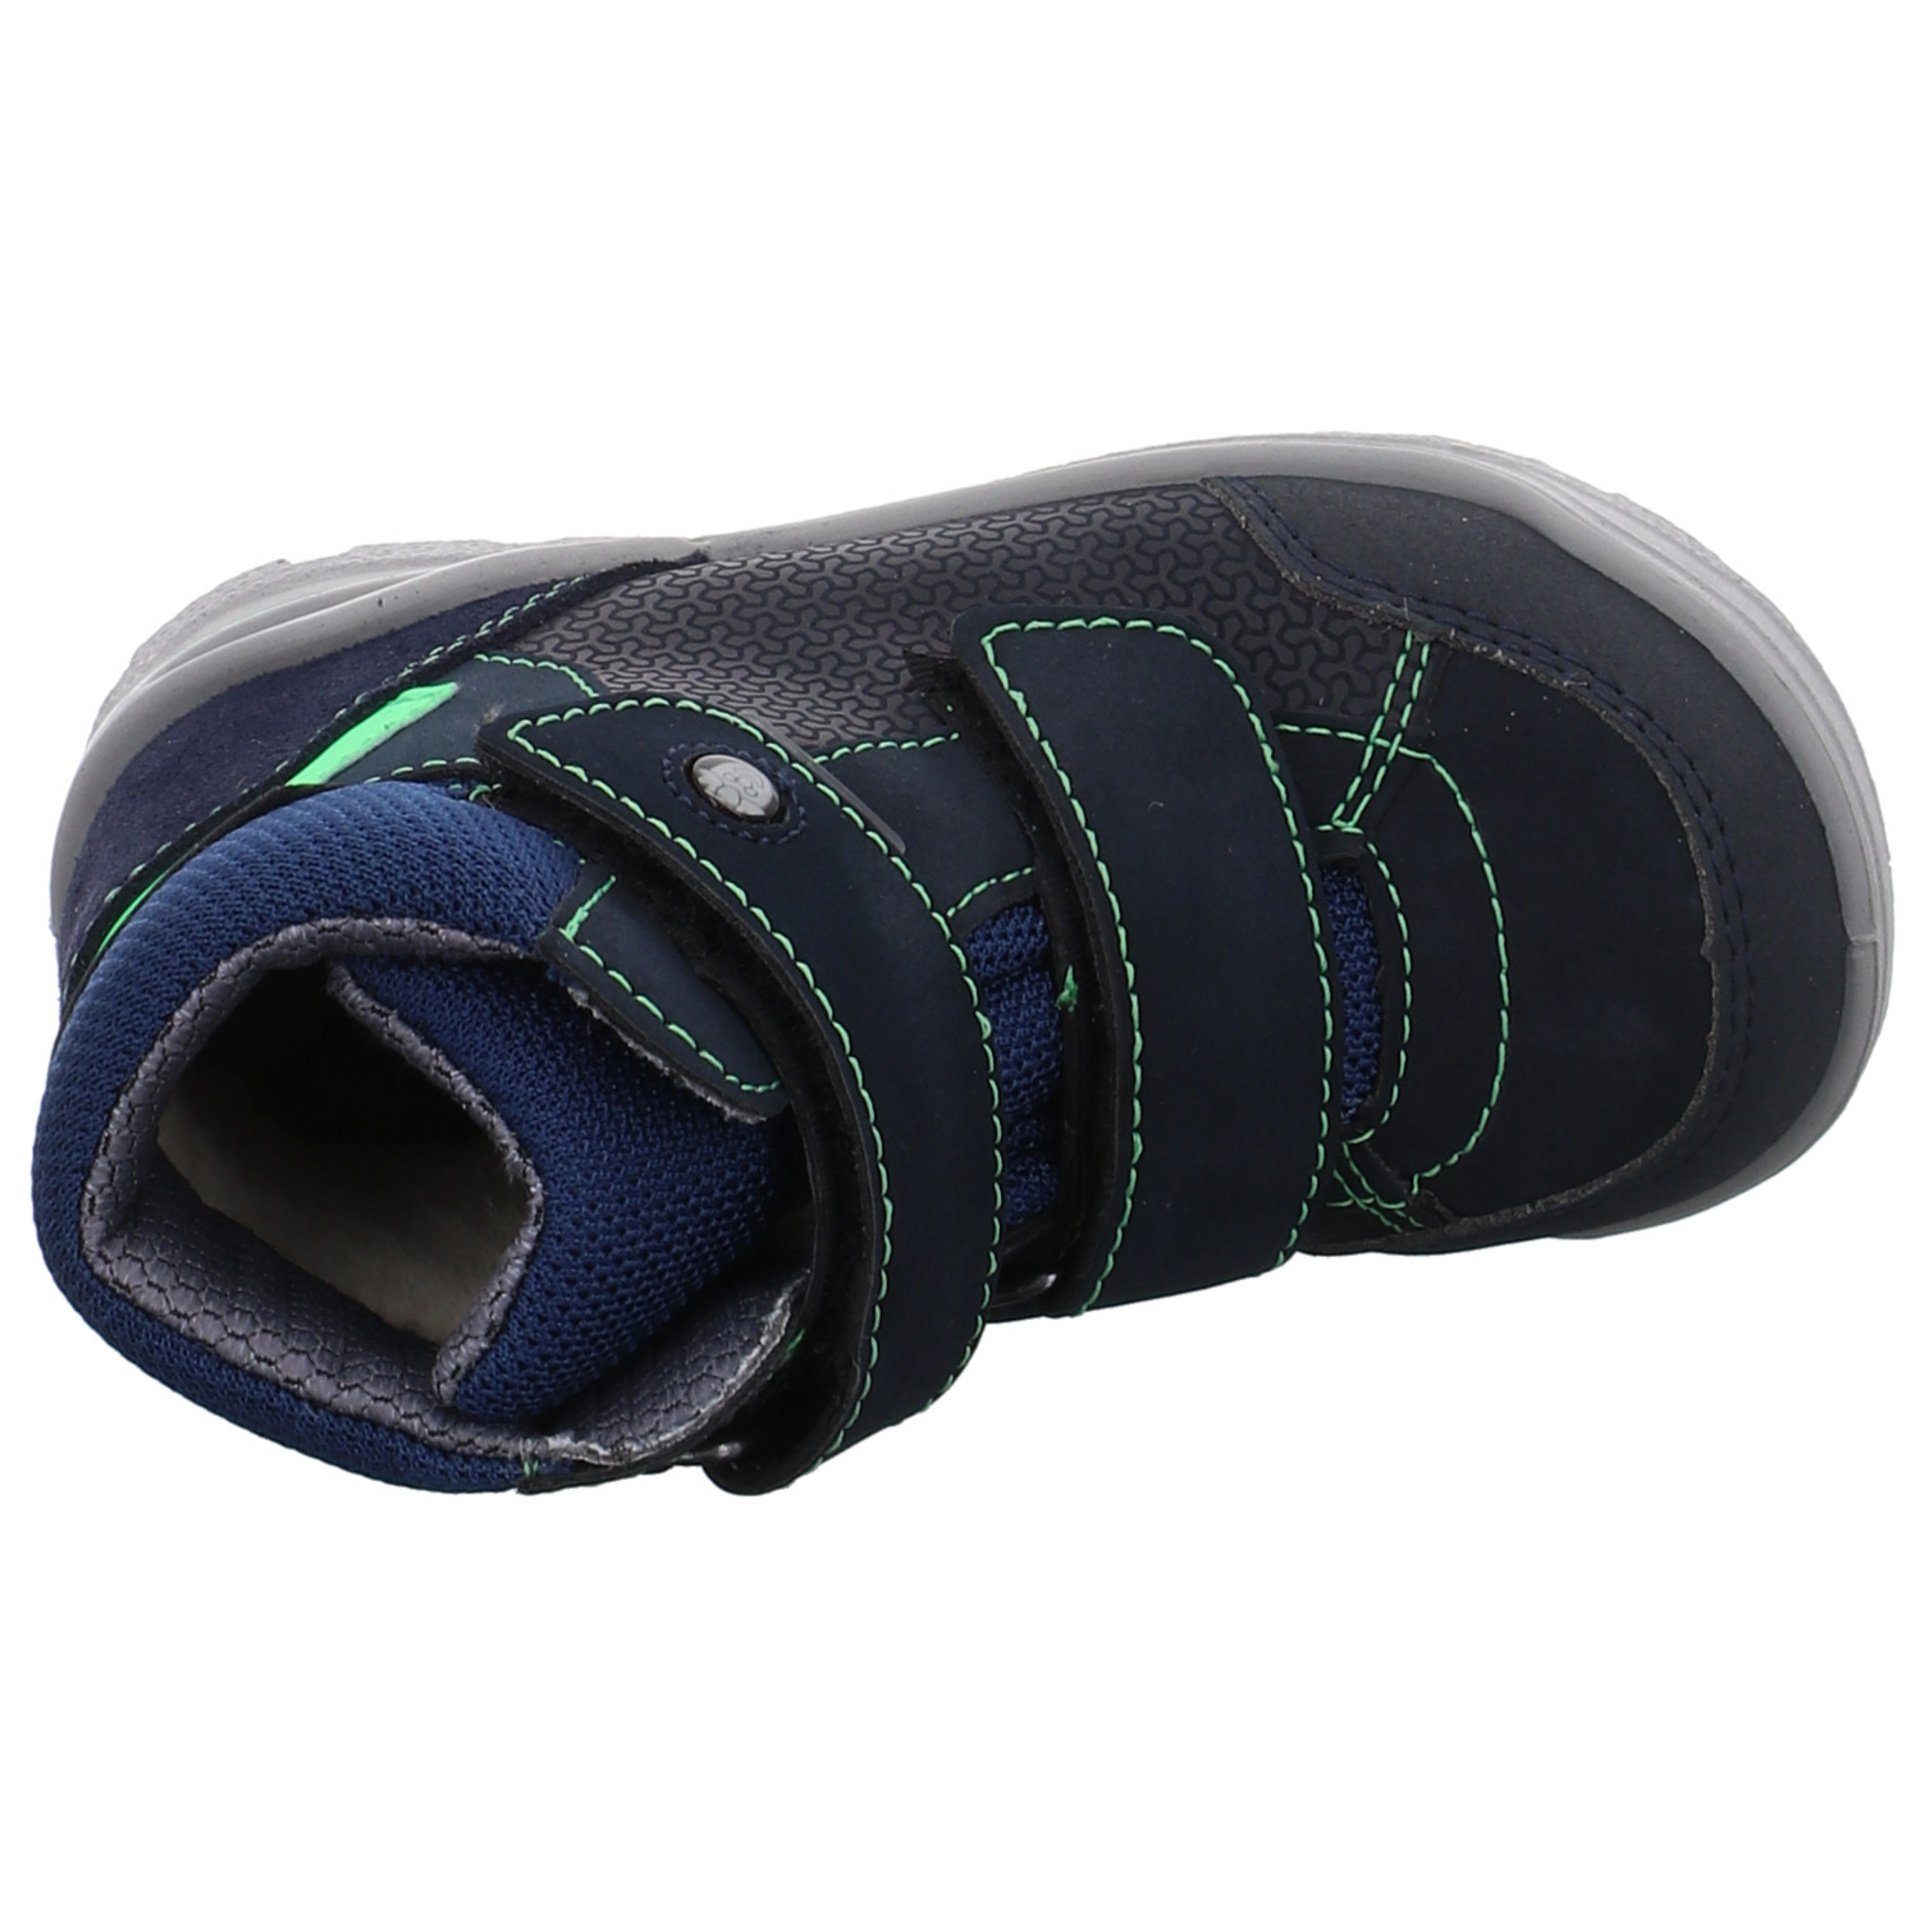 Ricosta Finn Boots Leder-/Textilkombination Leder-/Textilkombination Winterboots sonst blau Kombi uni